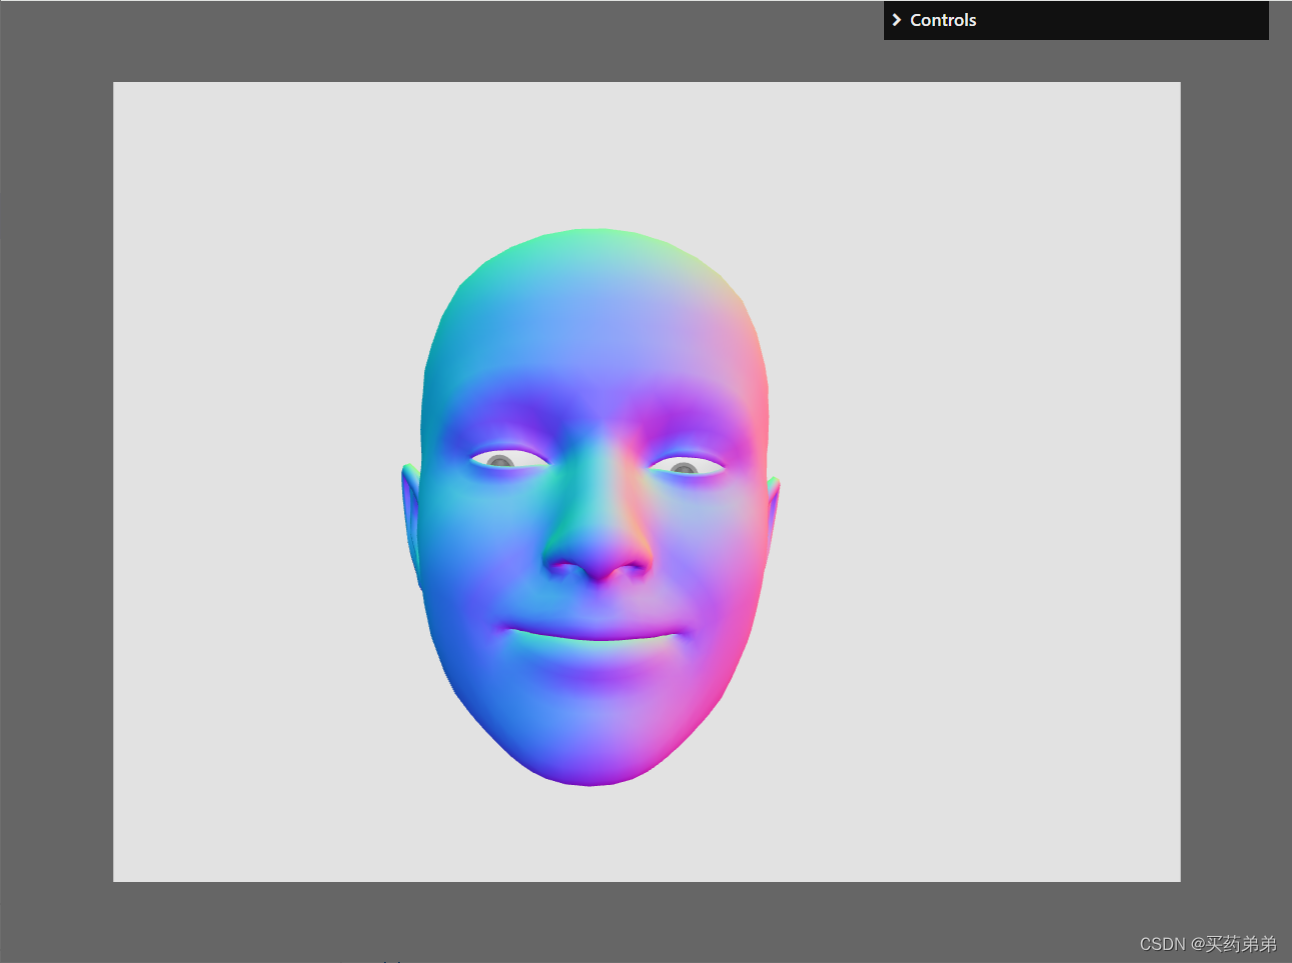 React + three.js 实现人脸动捕与3D模型表情同步